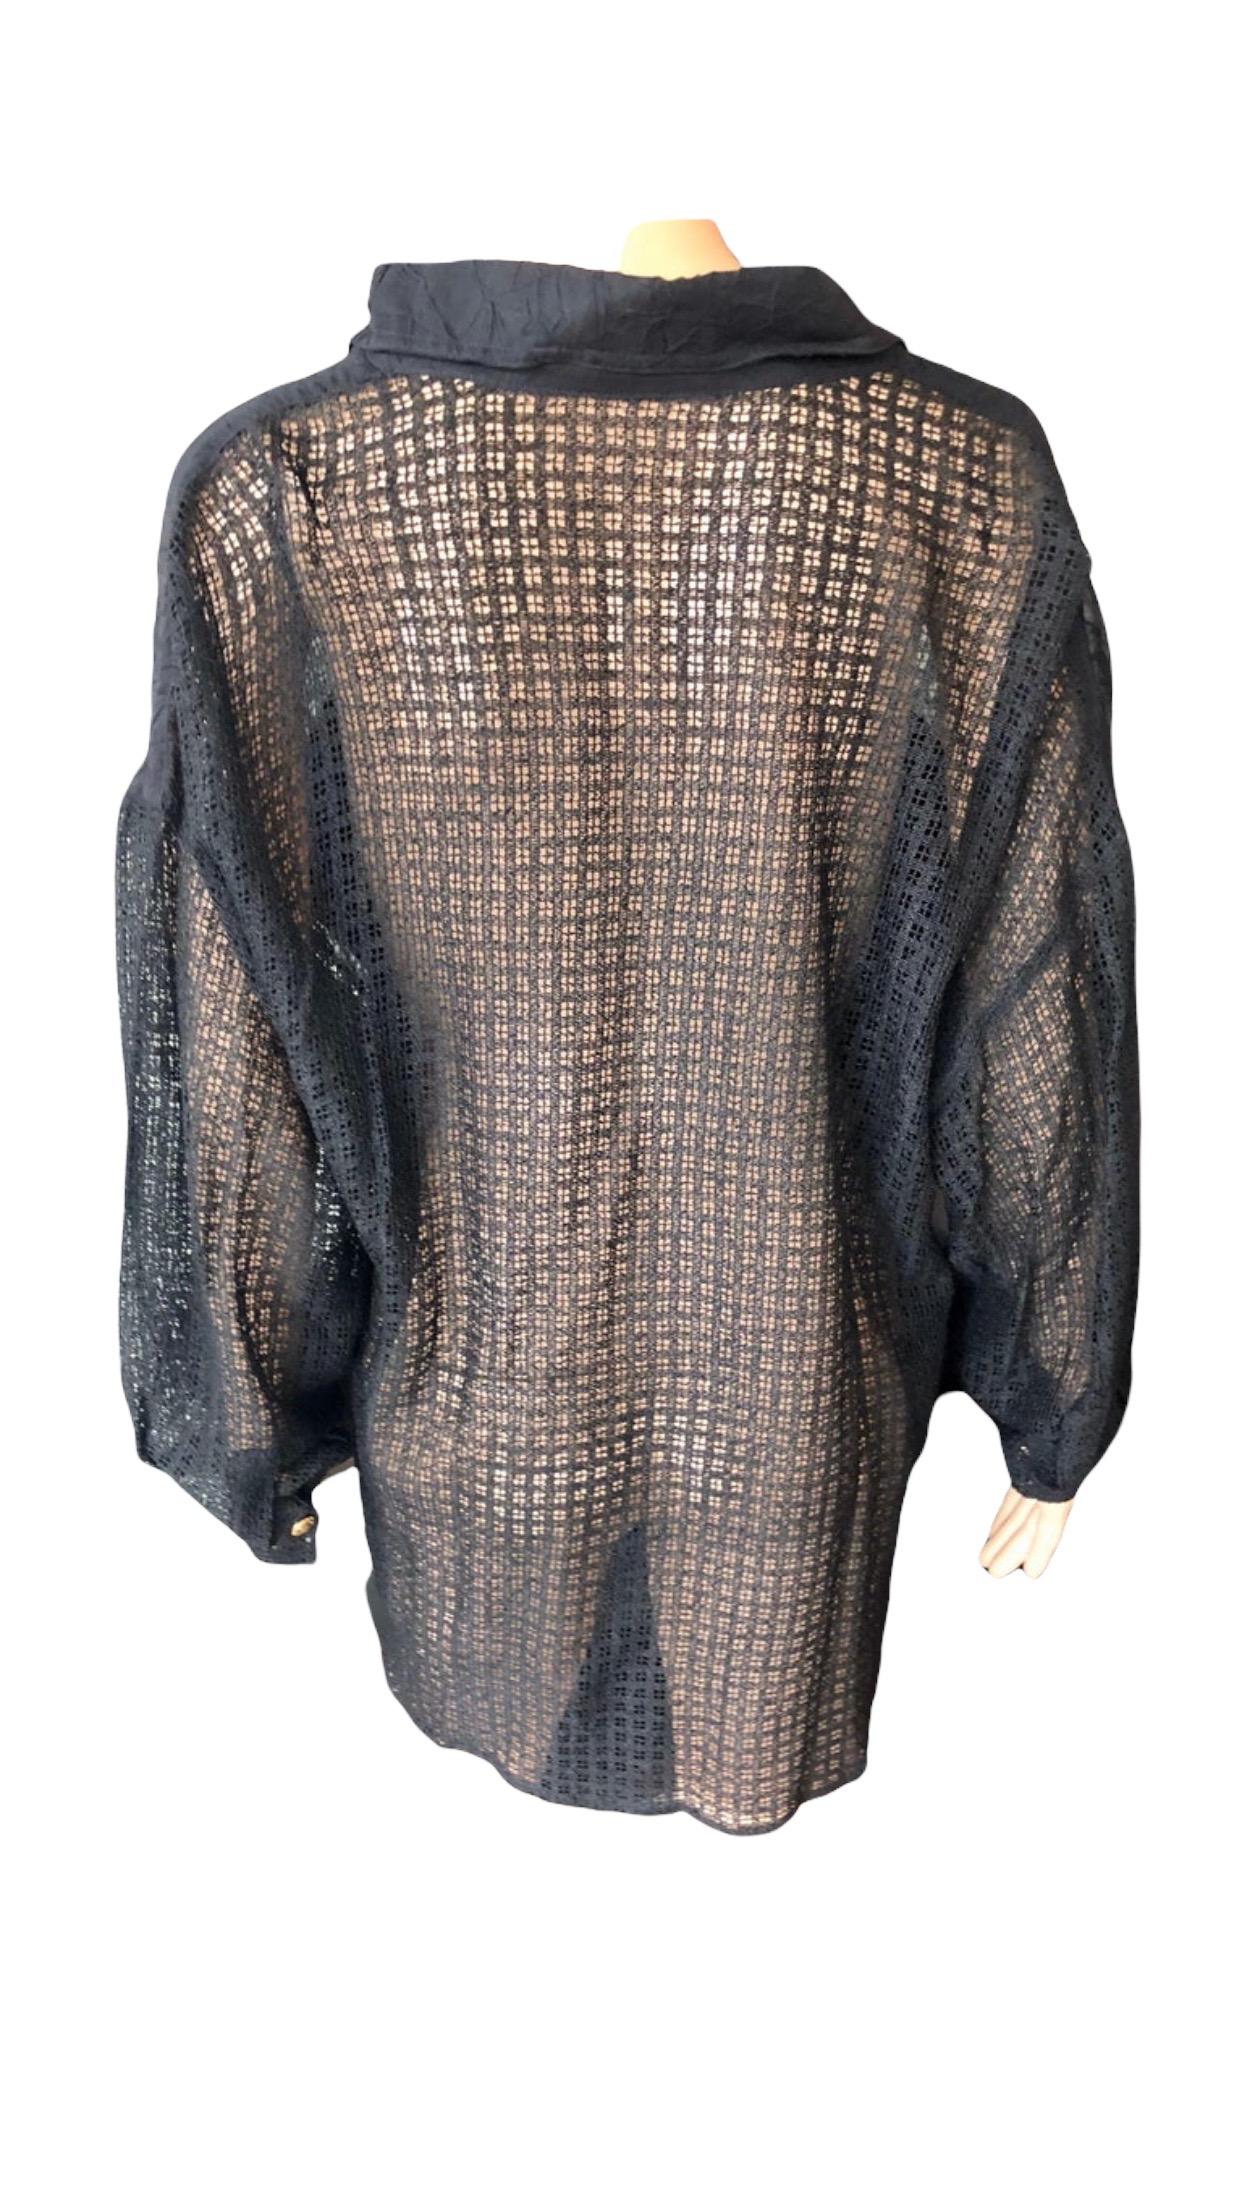 Gianni Versace c. 1990 Vintage Sheer Silk Mesh Black Shirt Blouse Top For Sale 8